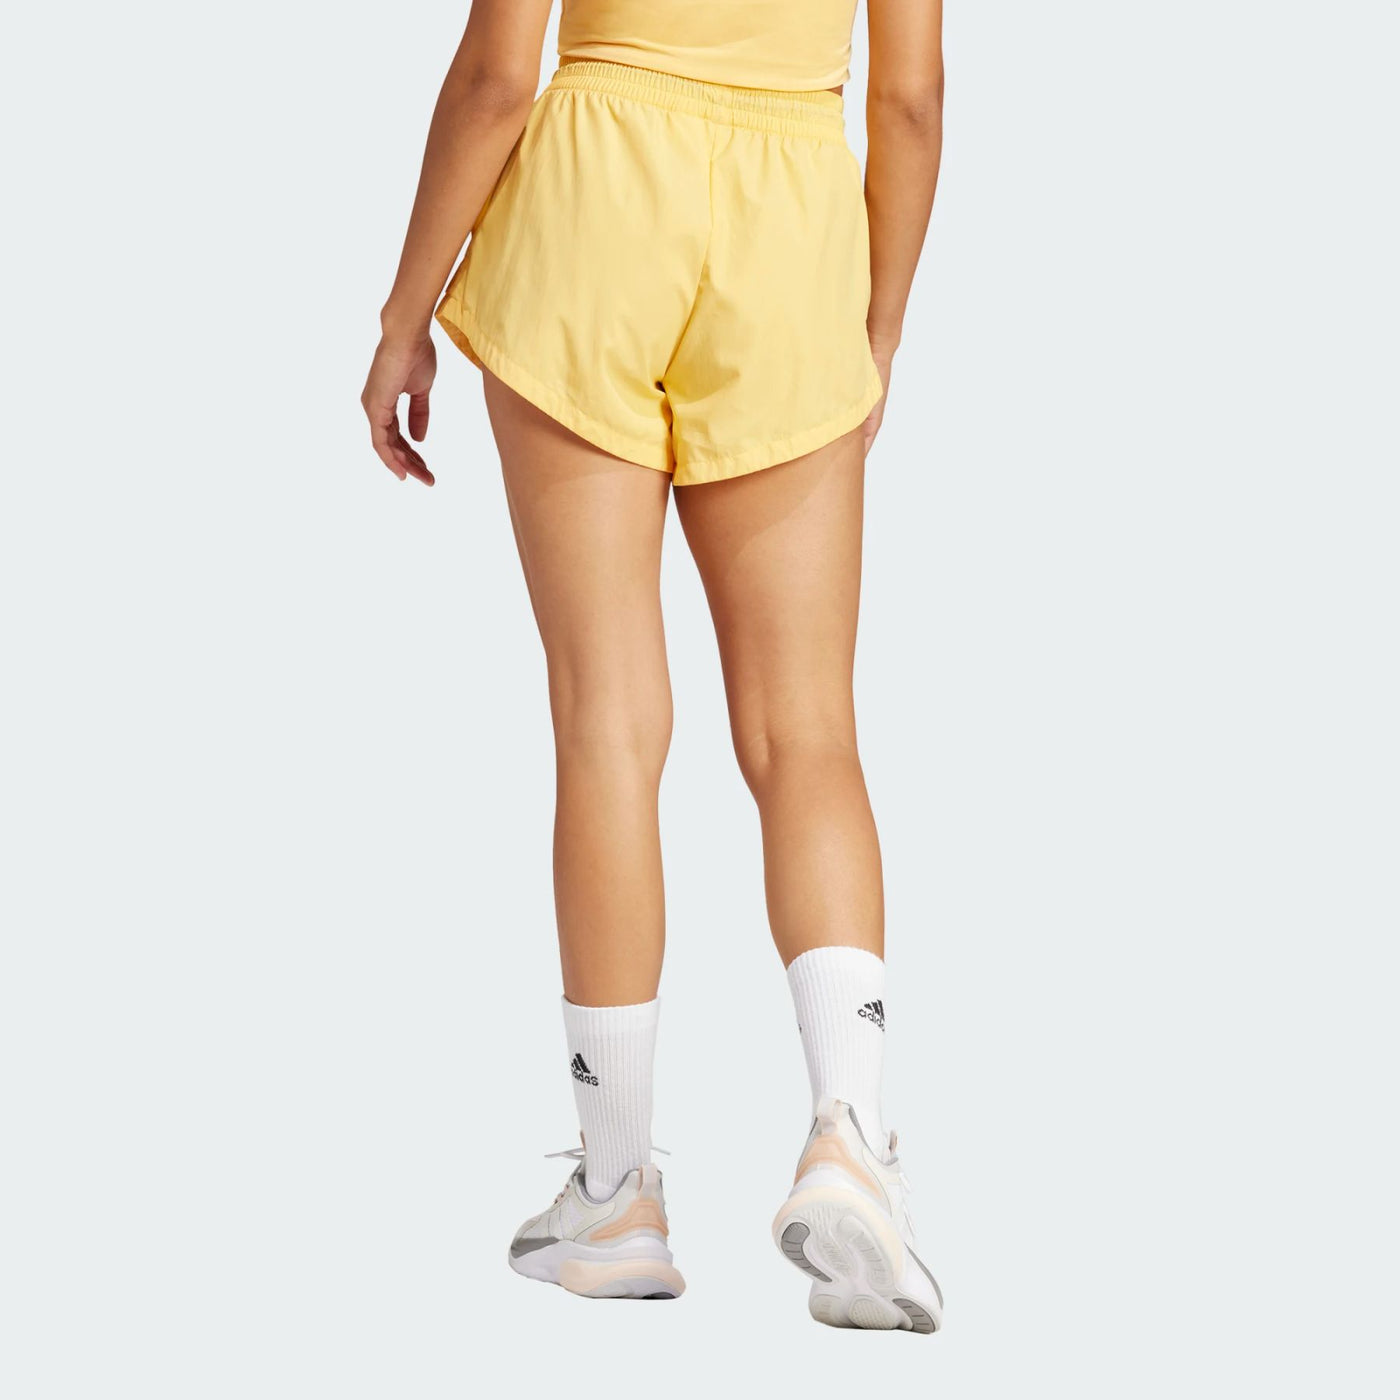 IS0662 - Shorts - Adidas